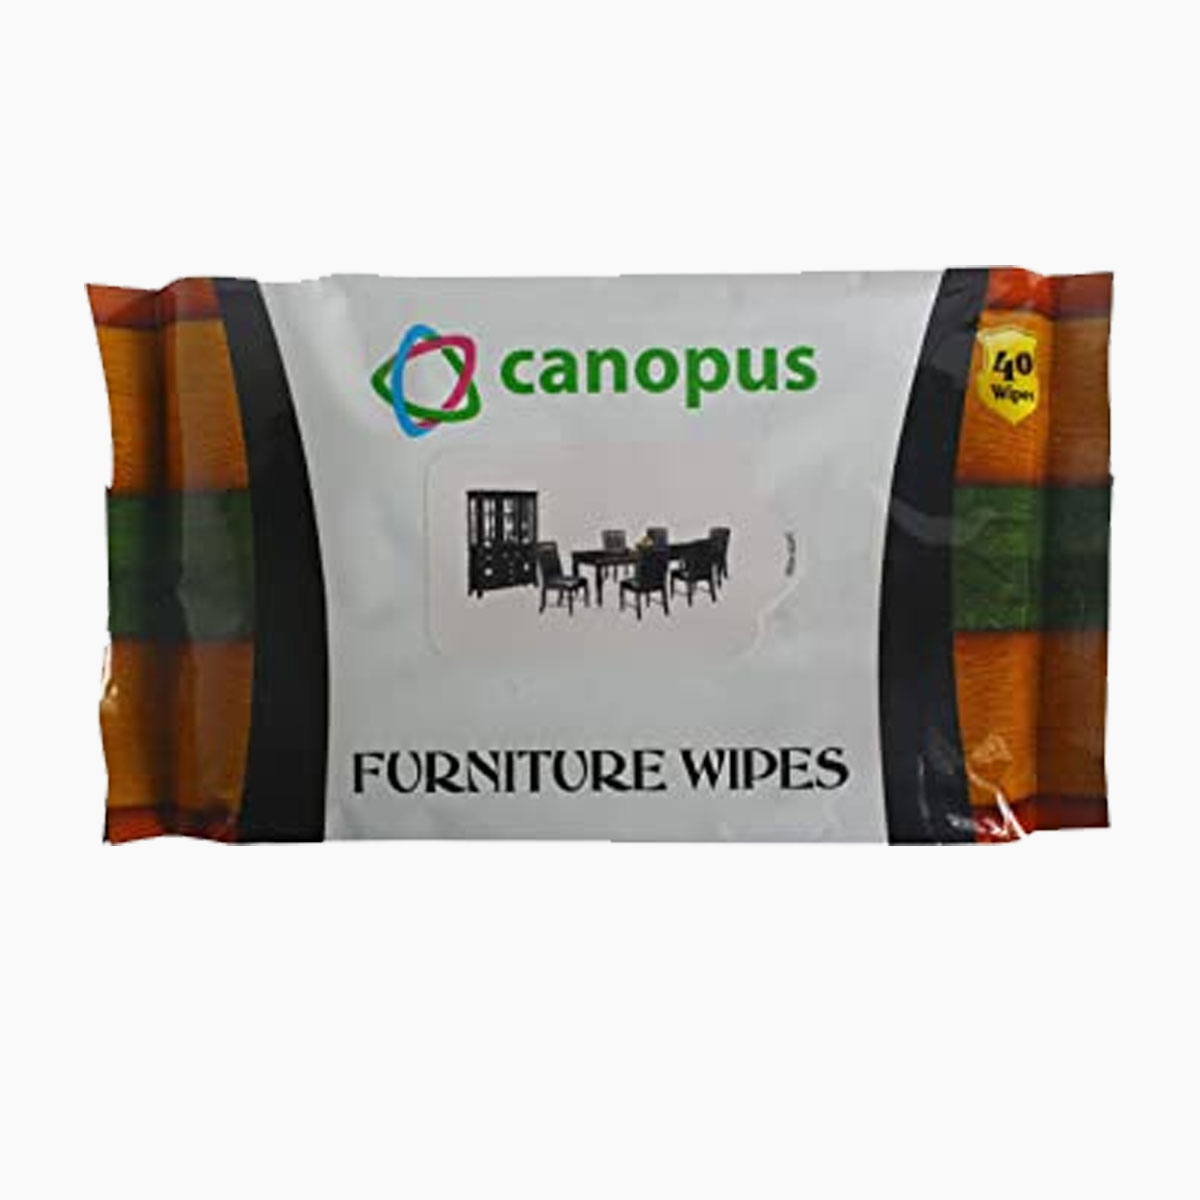 Canopus Furniture Wipes Price in India